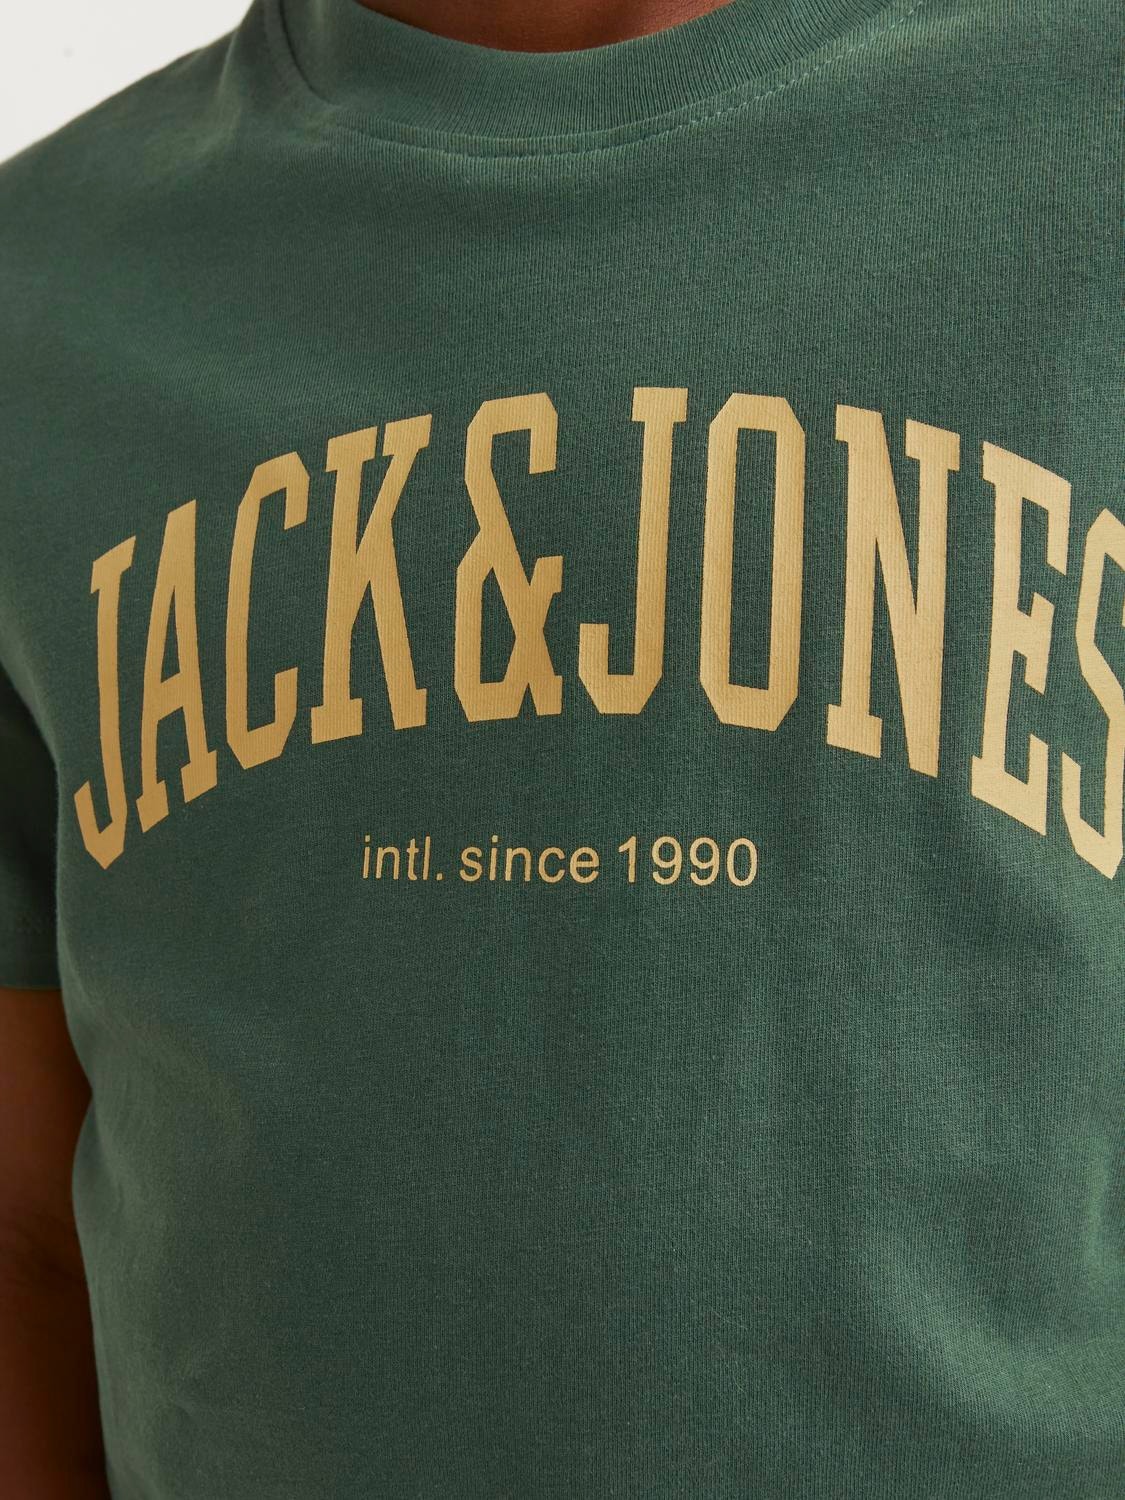 Jack & Jones T-shirt Imprimé Pour les garçons -Dark Green - 12237441